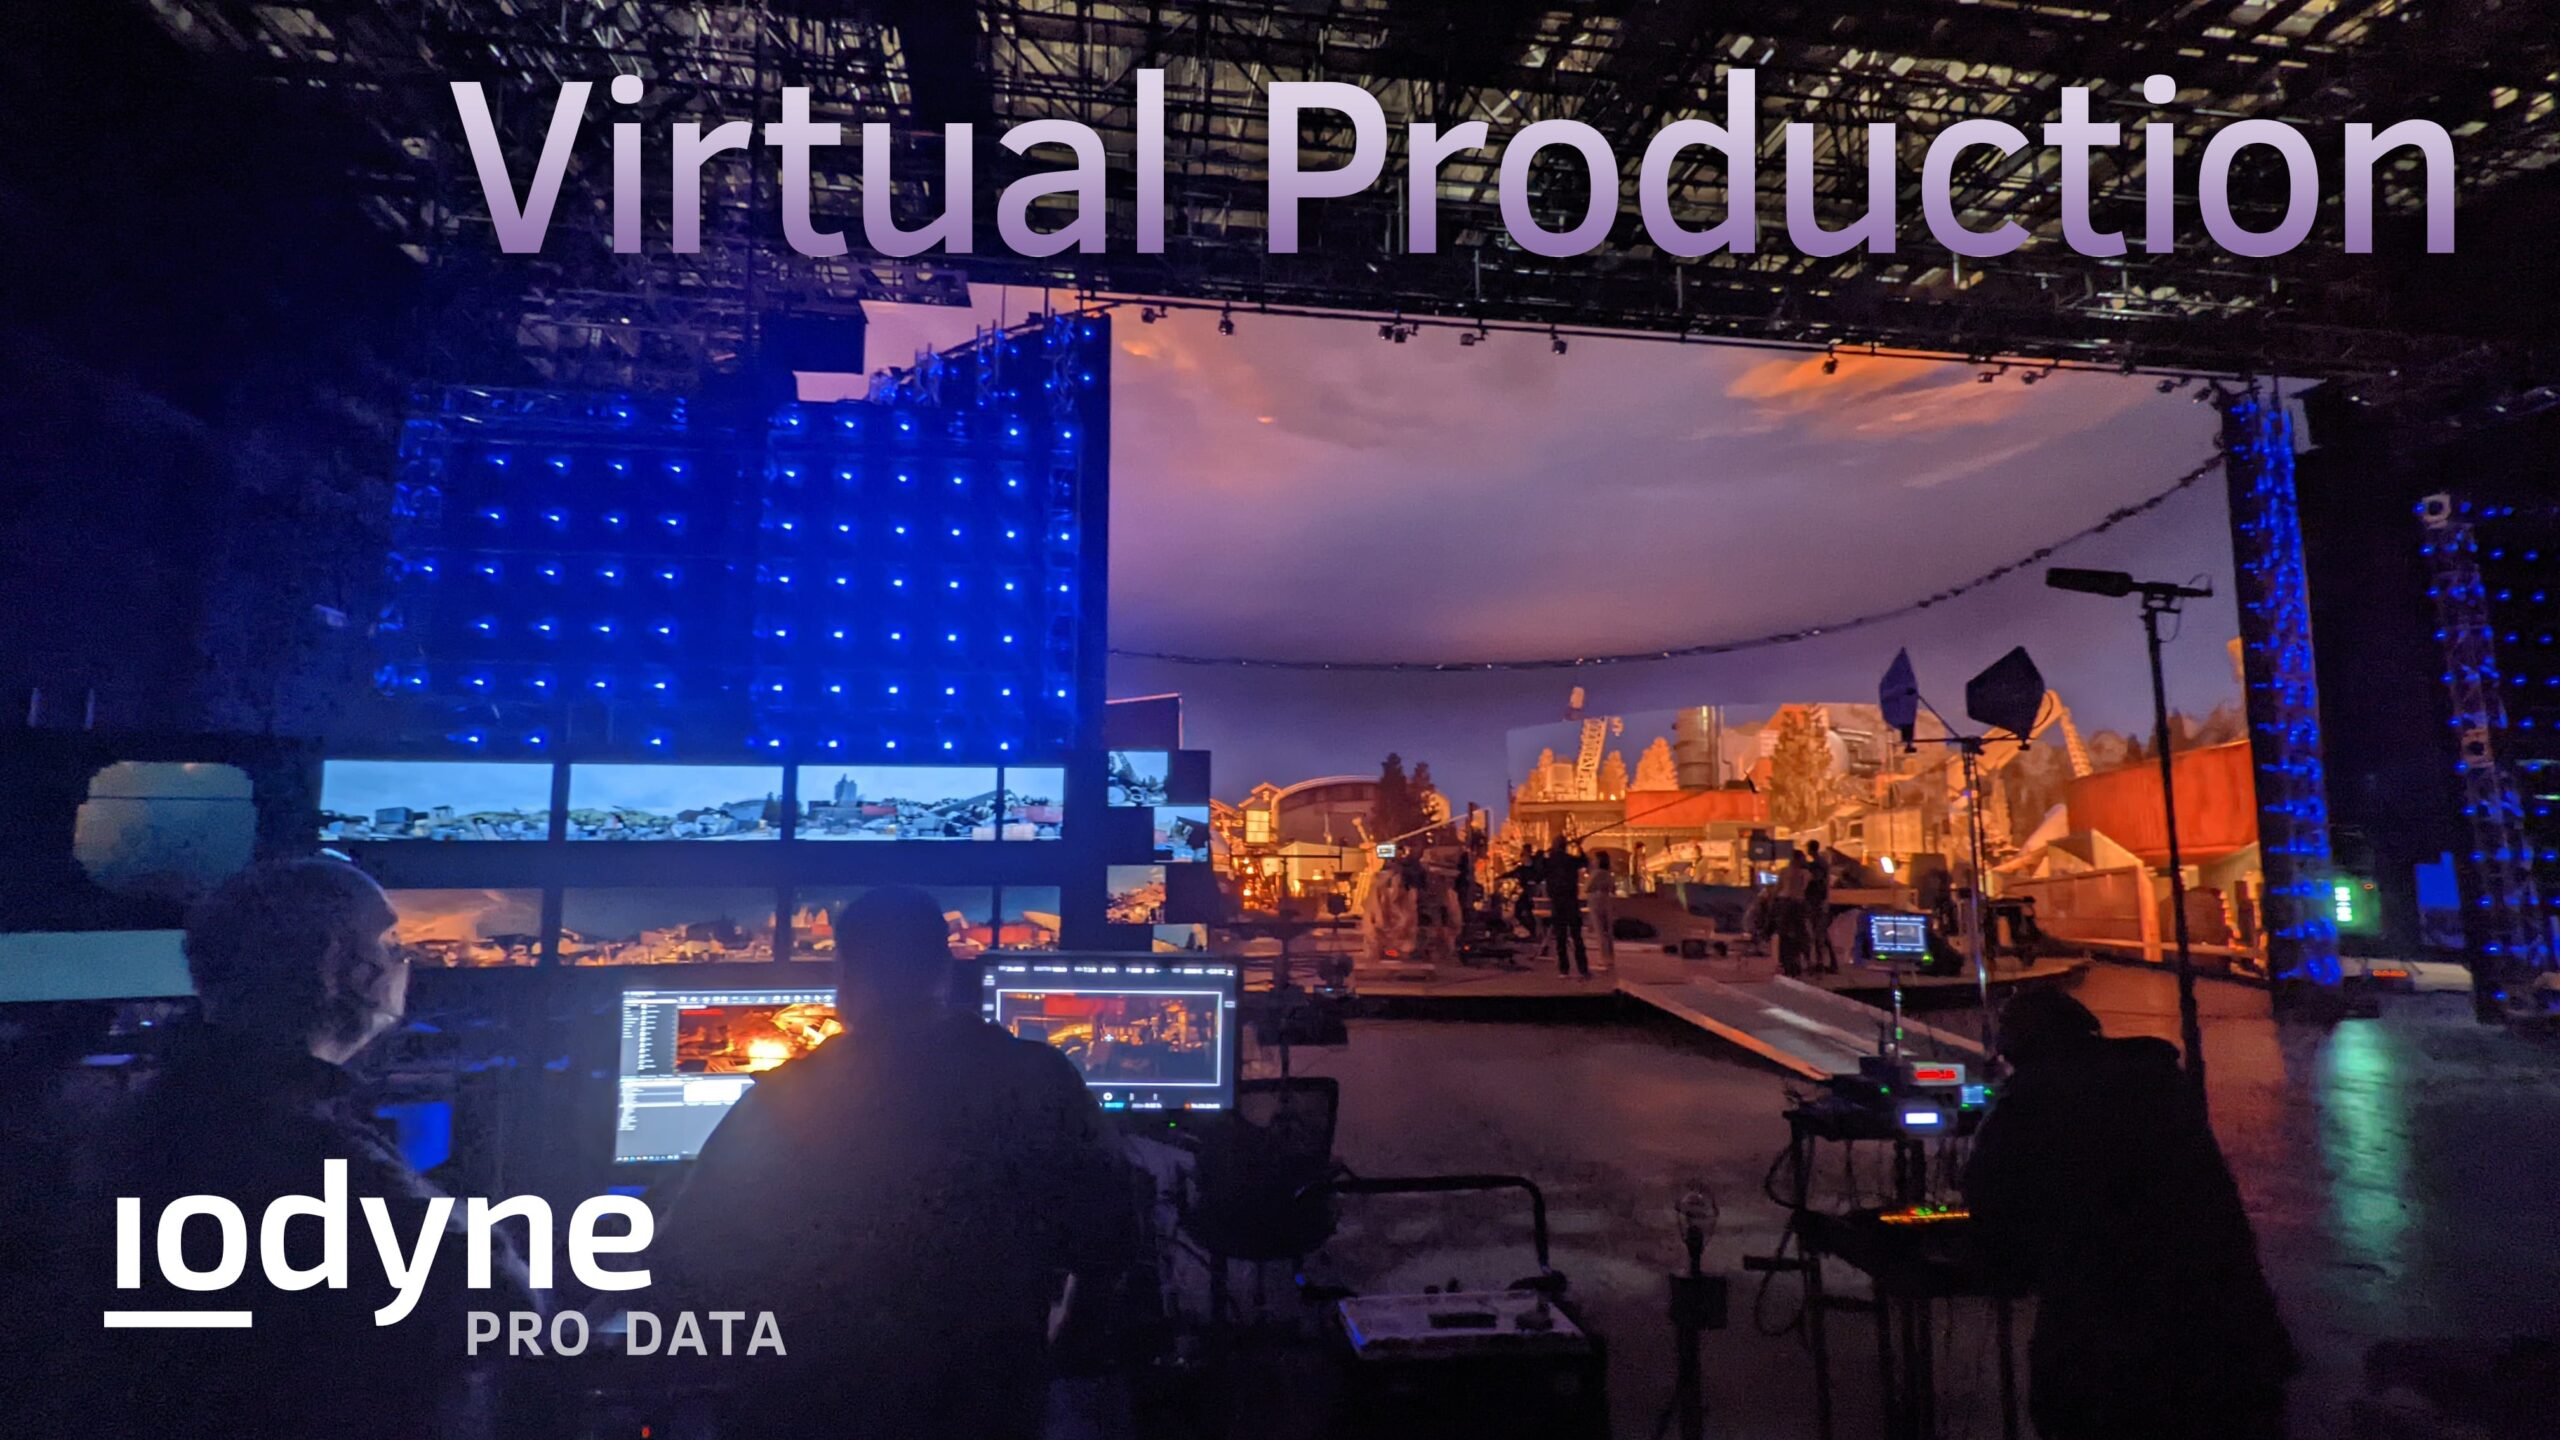 Virtual Production at Amazon Studios with Pro Data